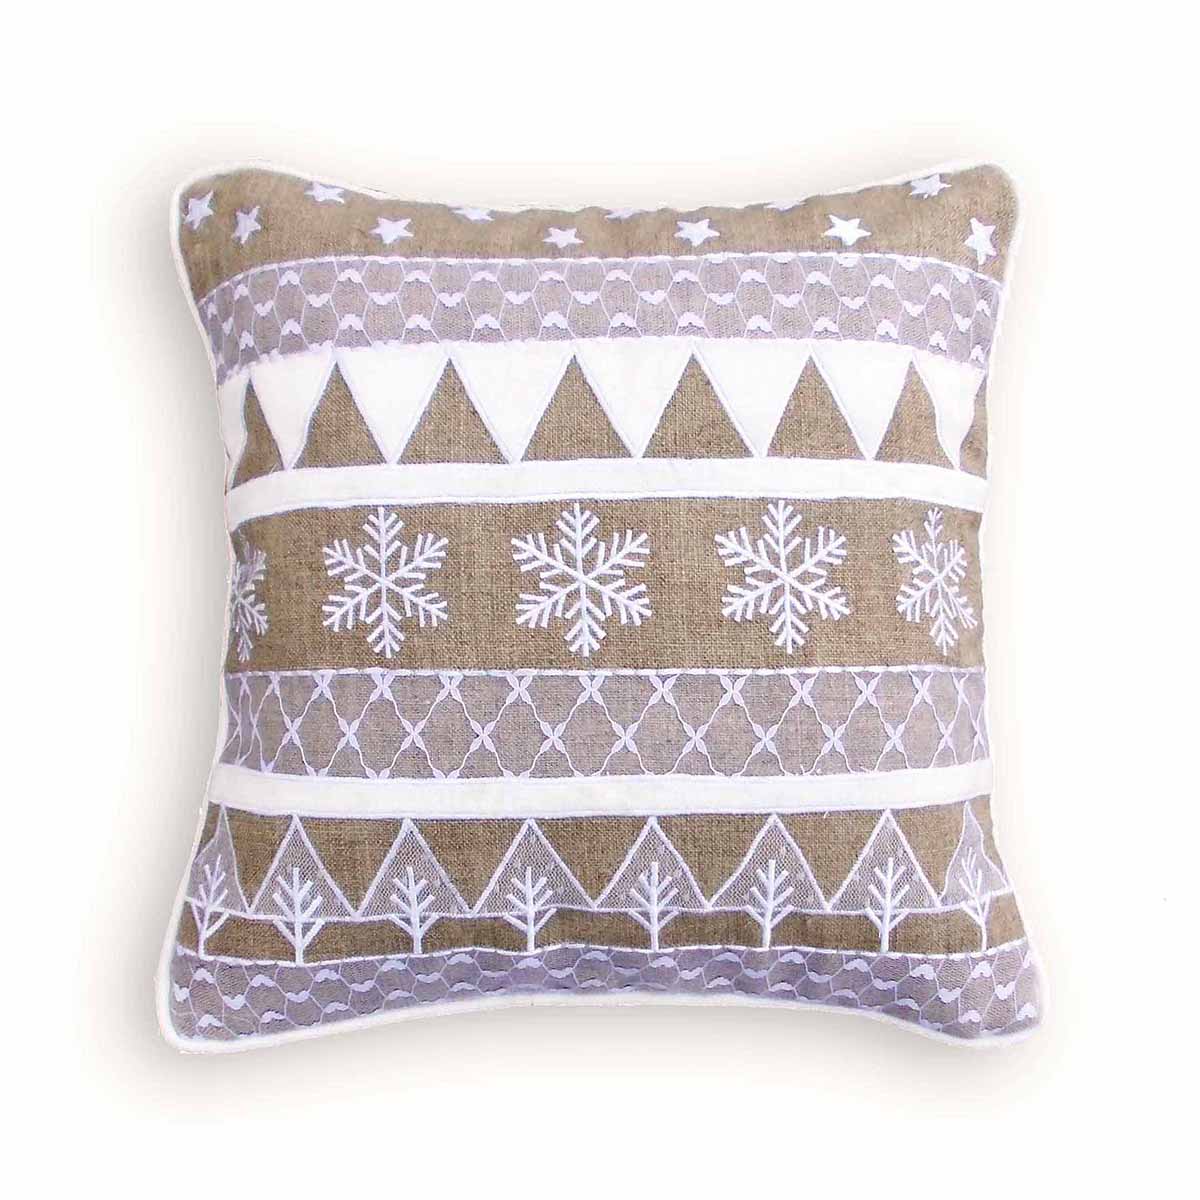 Christmas Snowflakes cushion cover